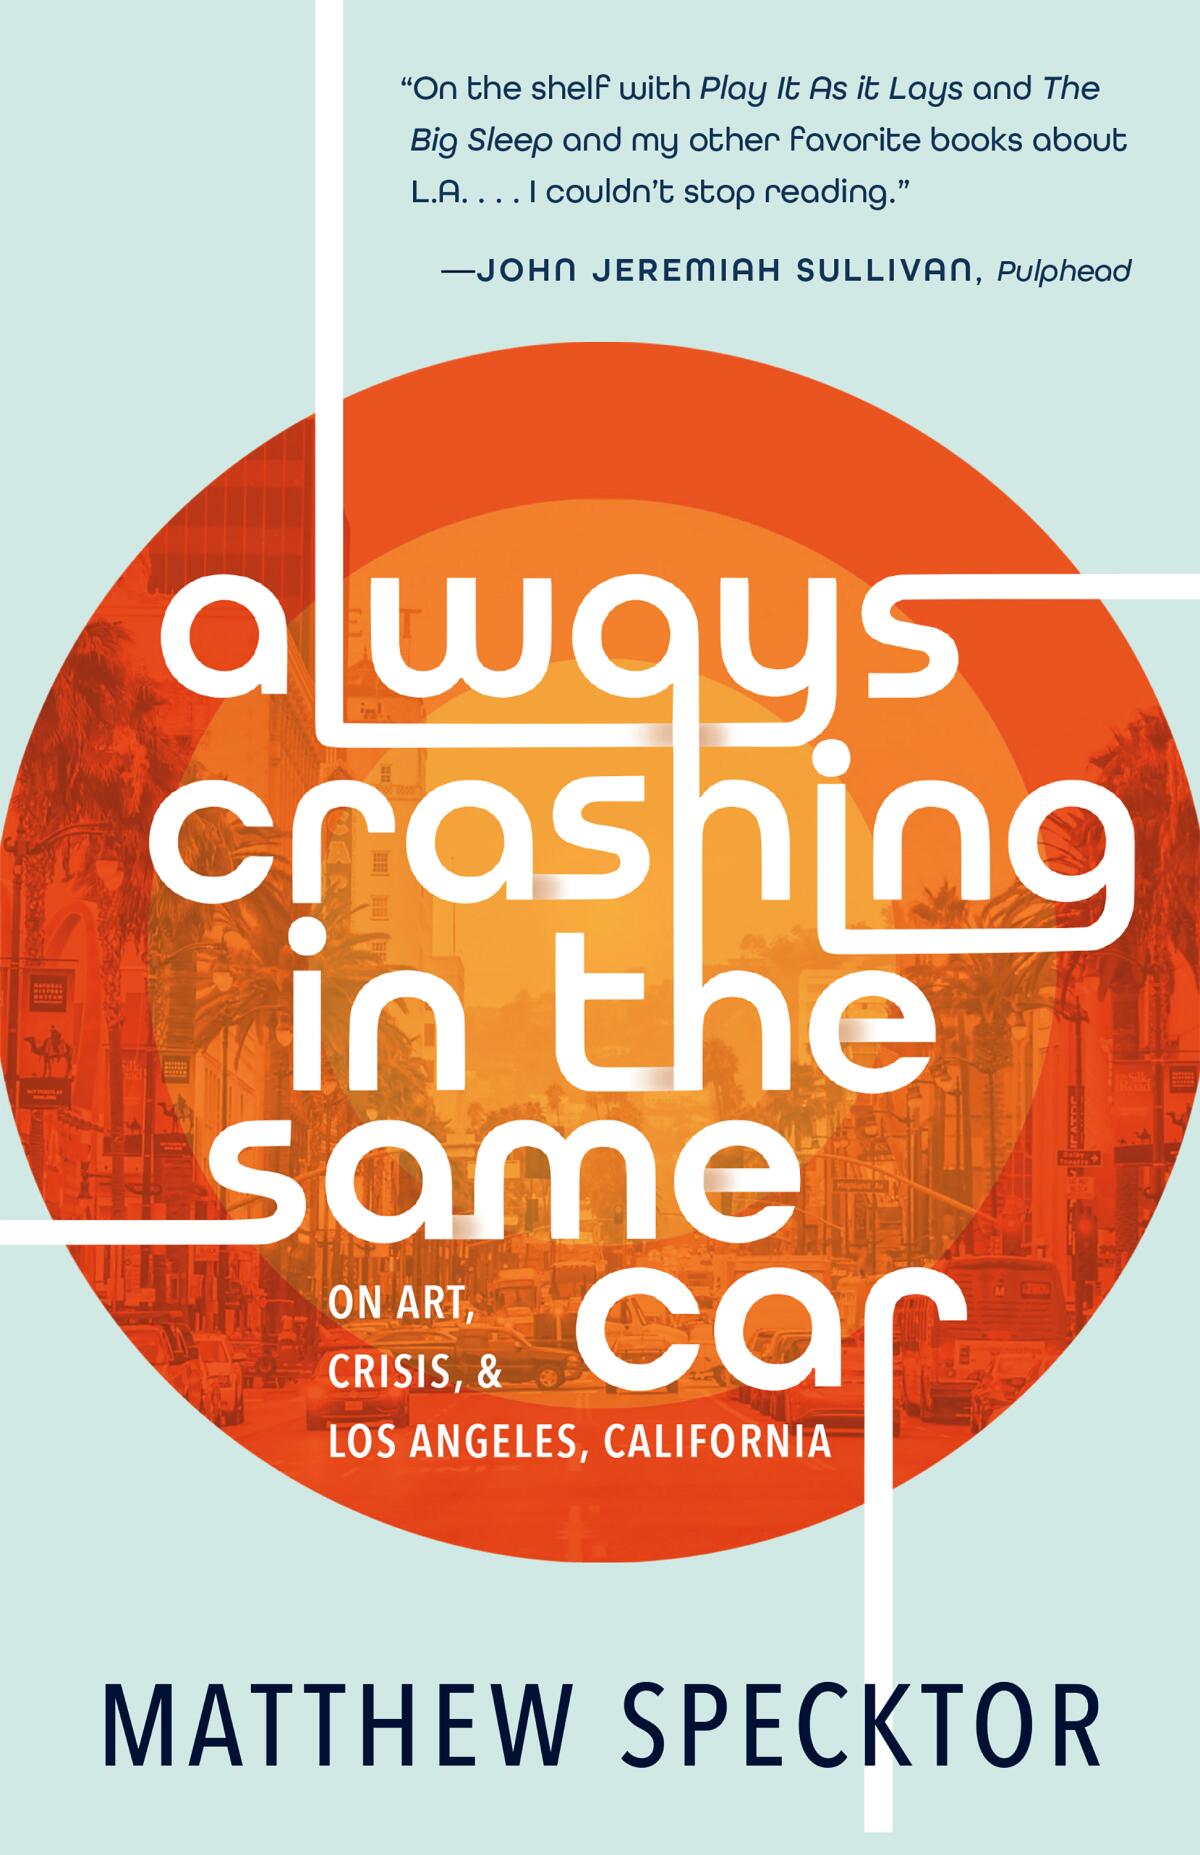 "Always Crashing in the Same Car" by Matthew Specktor